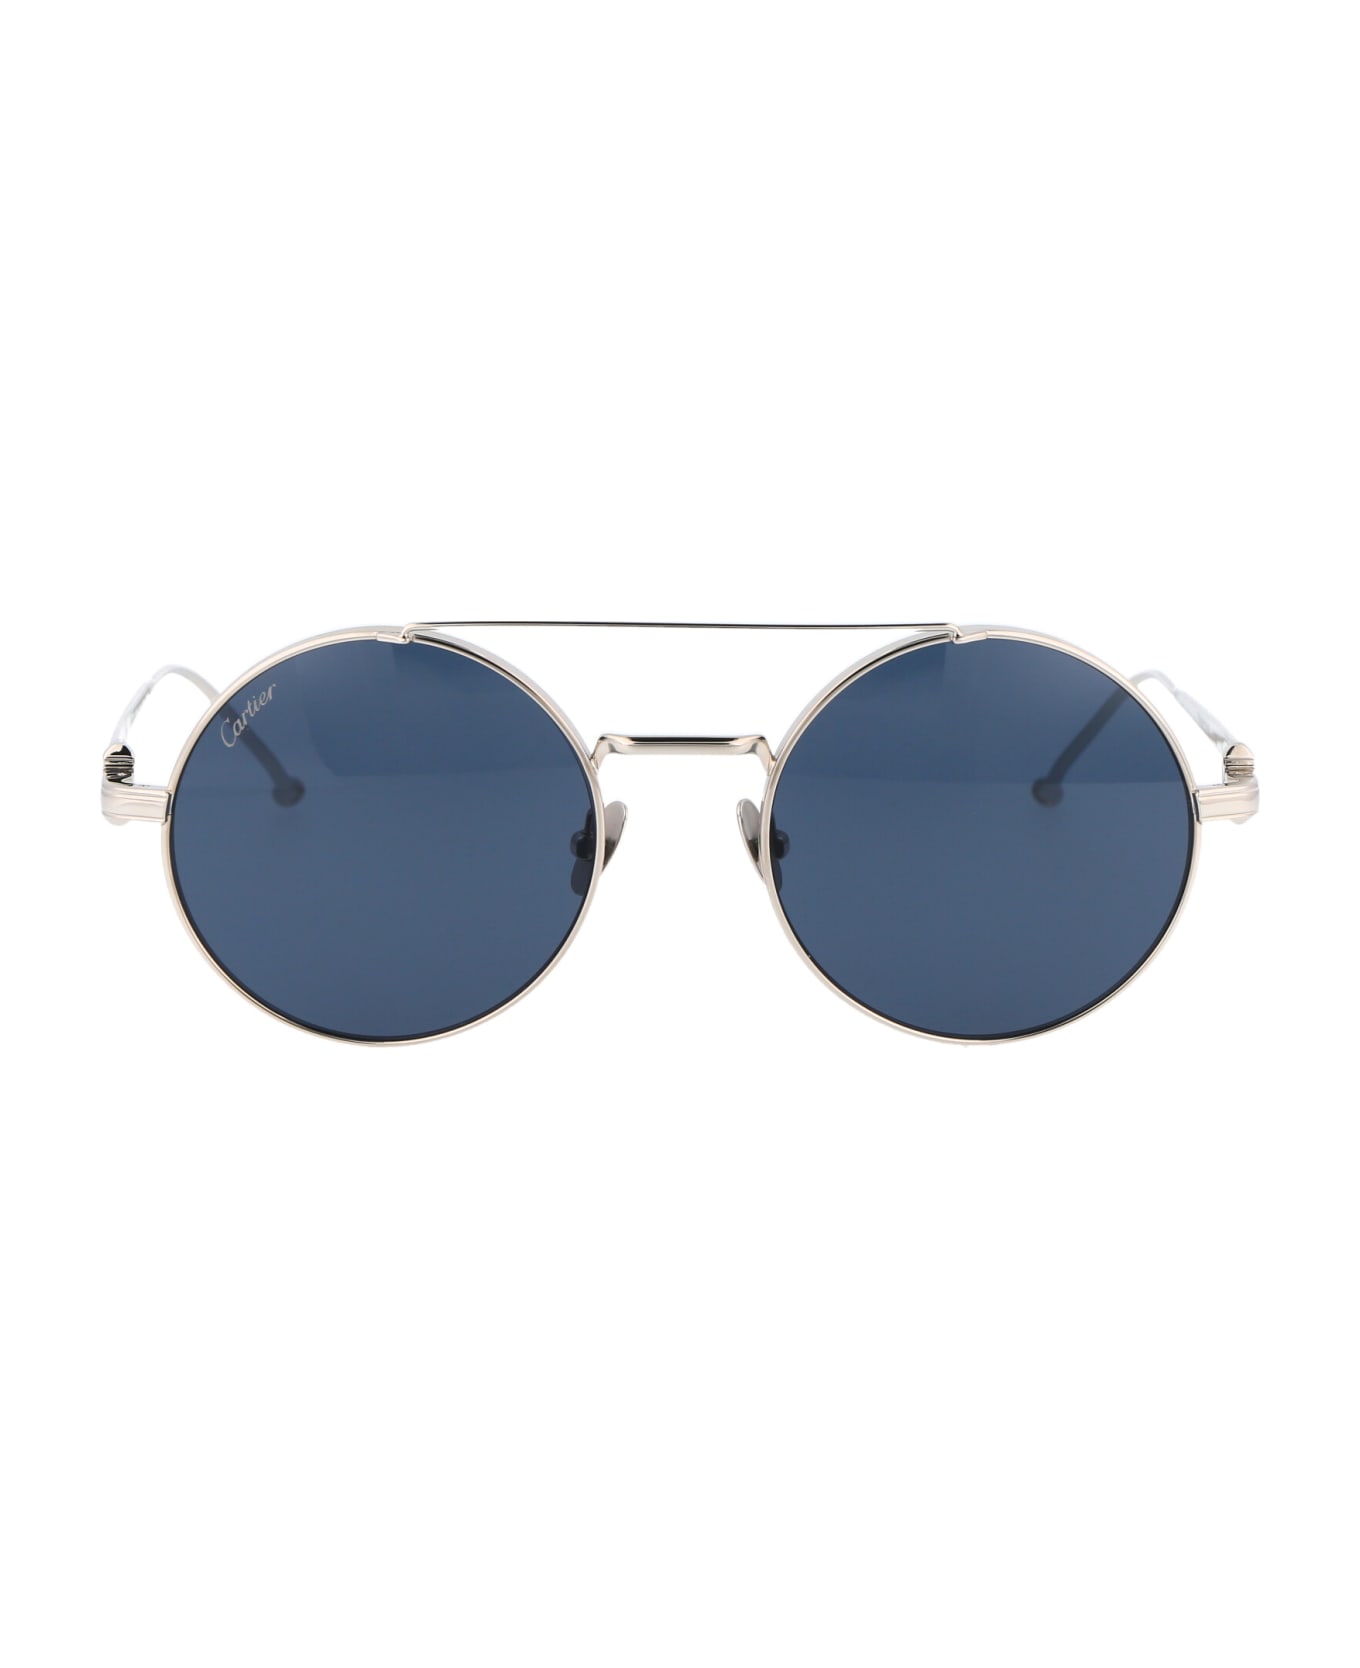 Cartier Eyewear Ct0279s Sunglasses - 002 SILVER SILVER LIGHT BLUE